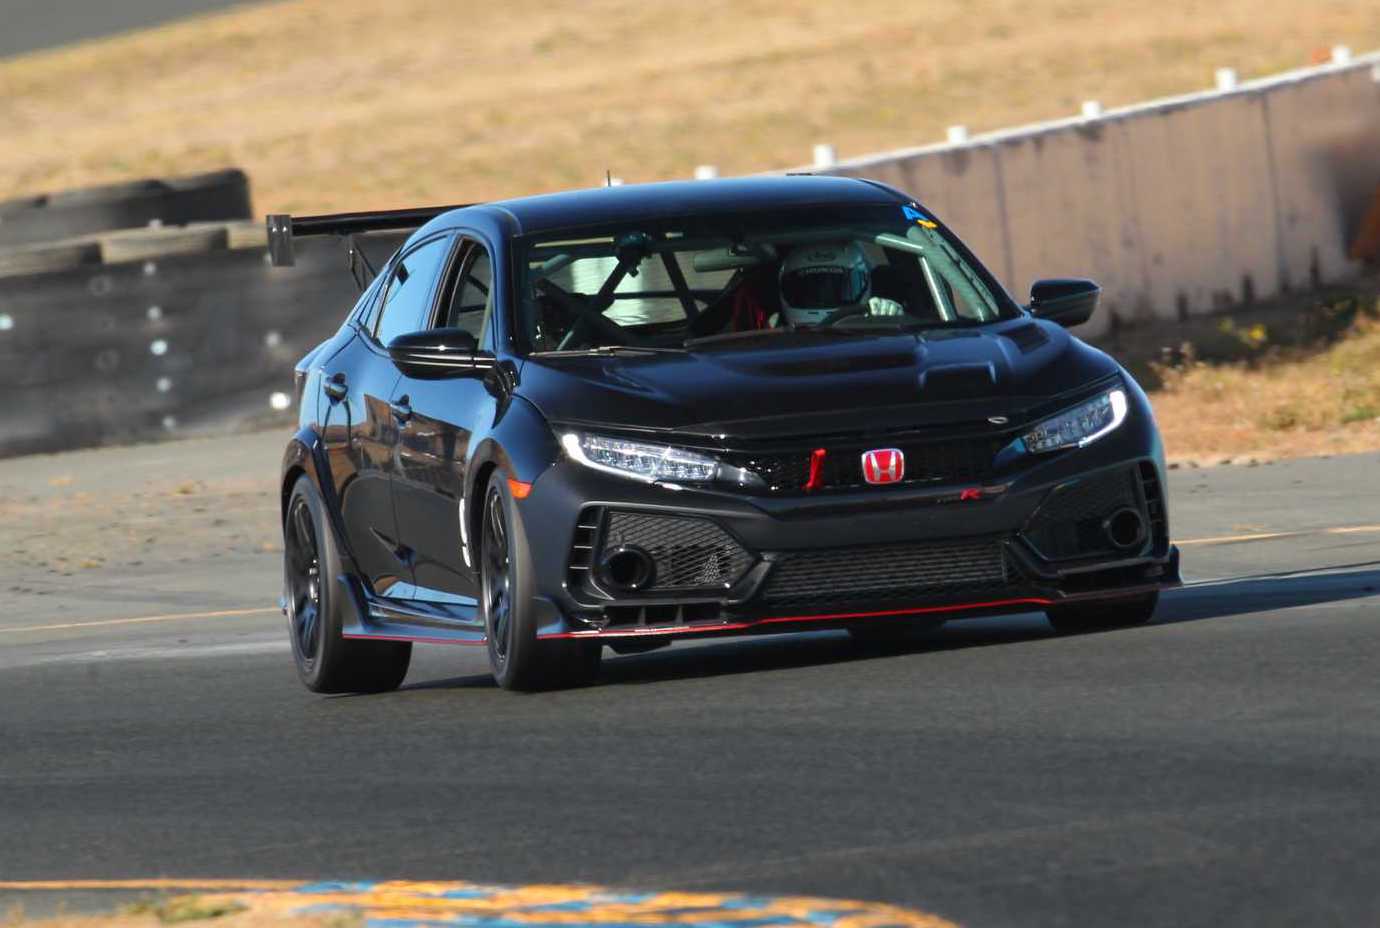 Honda Announces Civic Type R Tc Customer Racing Car